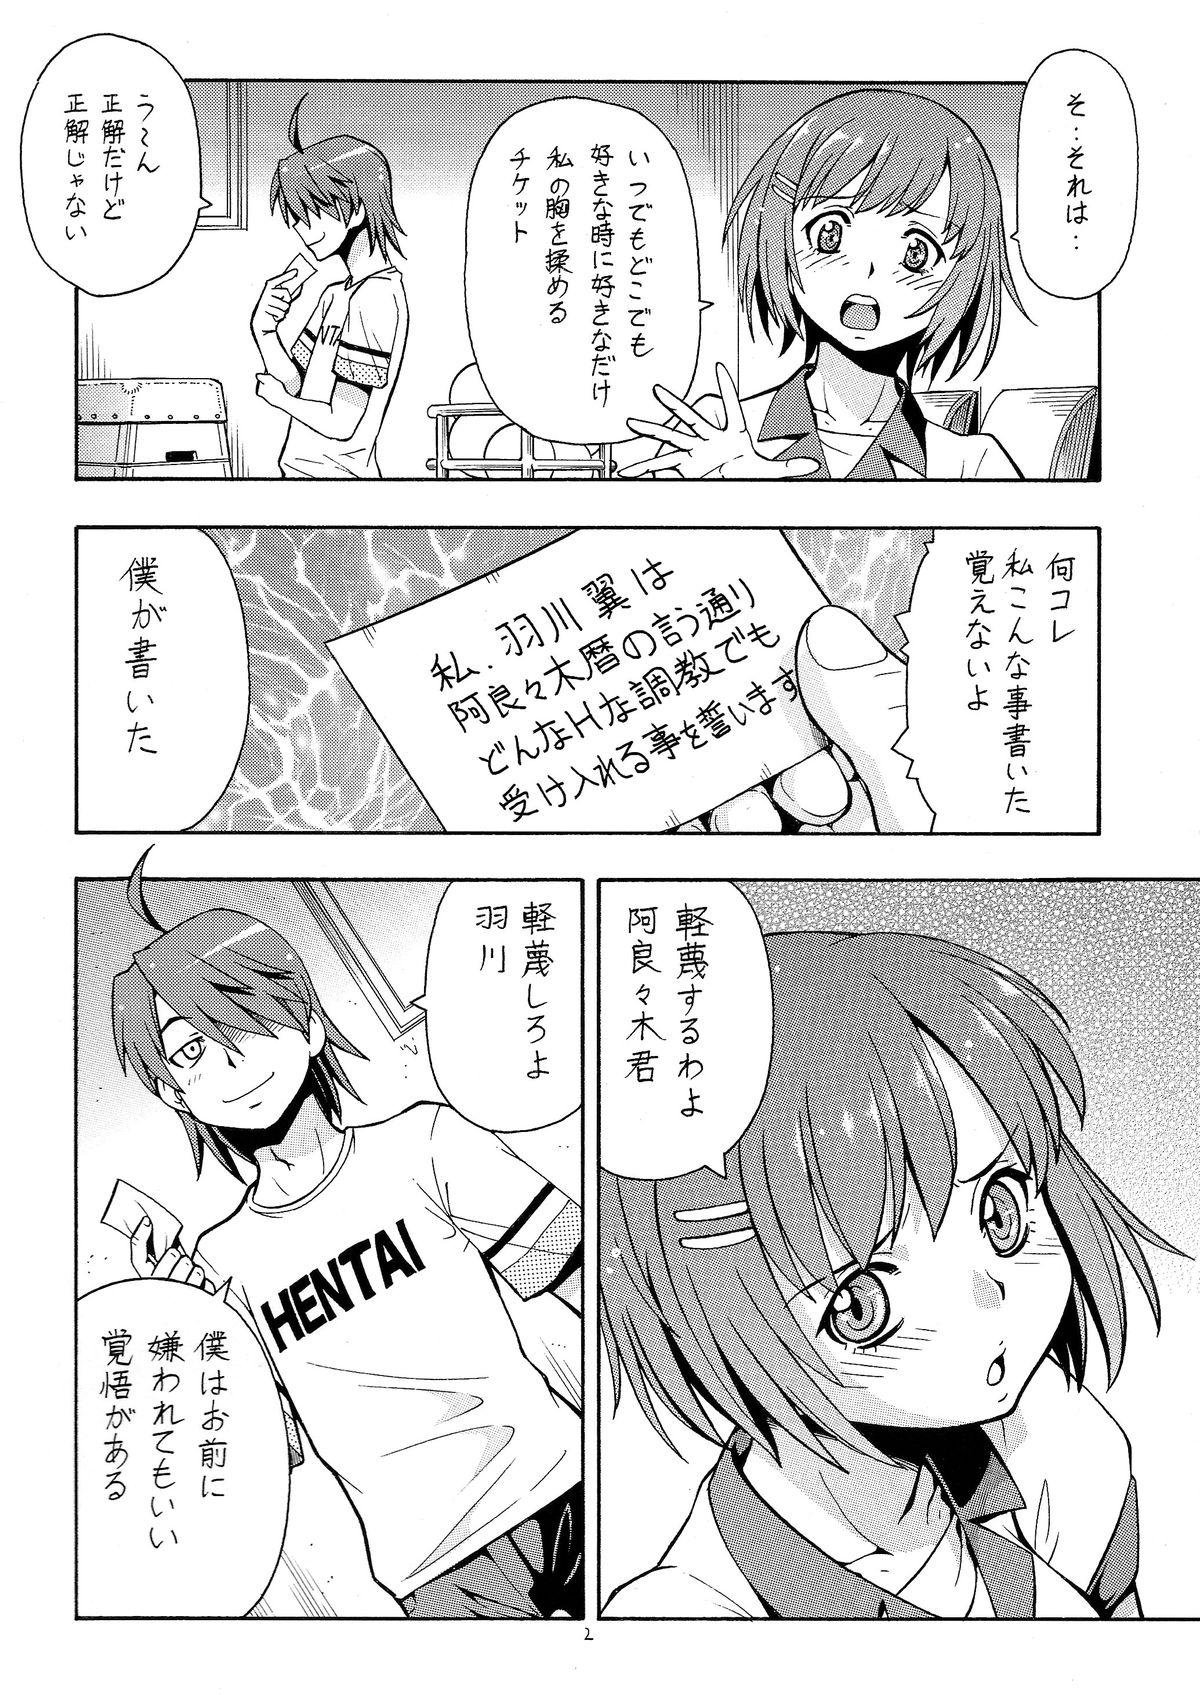 Milk Hito ni Hakanai to Kaite "Araragi" to Yomu 7 - Bakemonogatari Livecams - Page 4